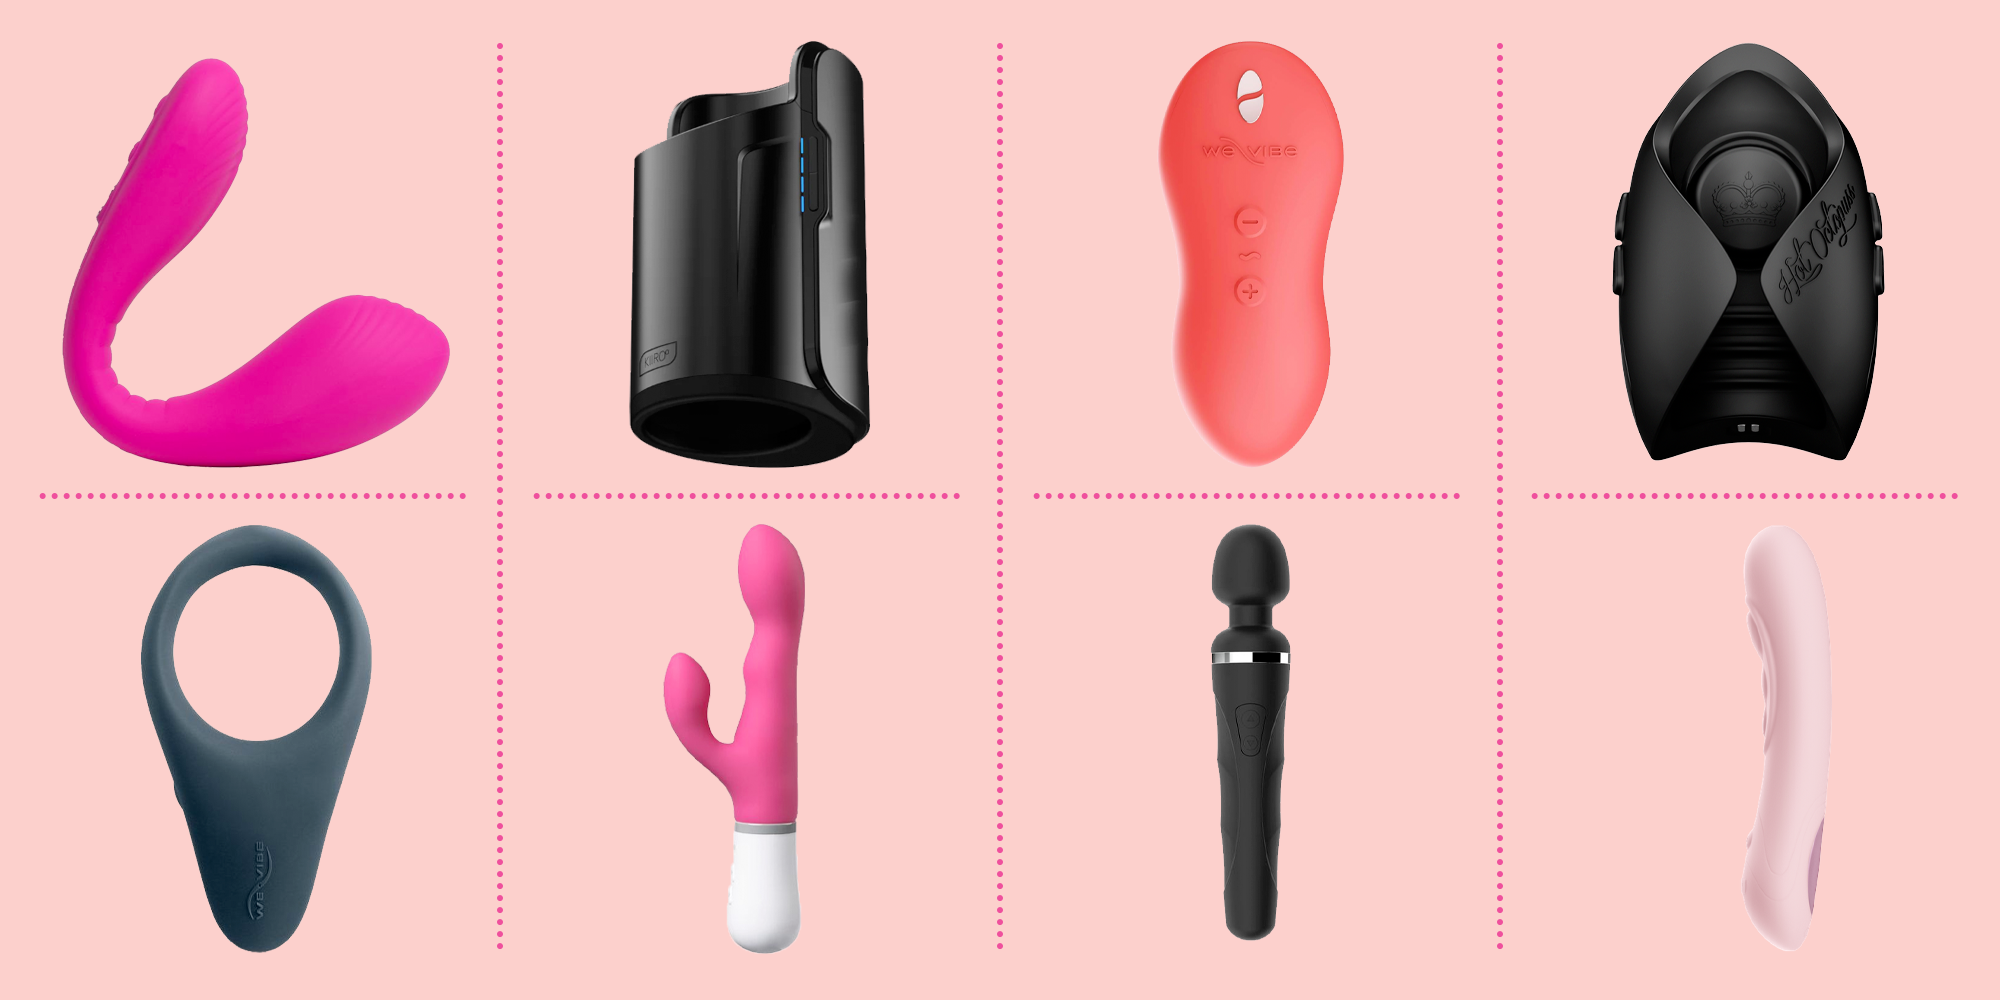 Bluetooth Female Vibrator Sex Products Application Intelligent